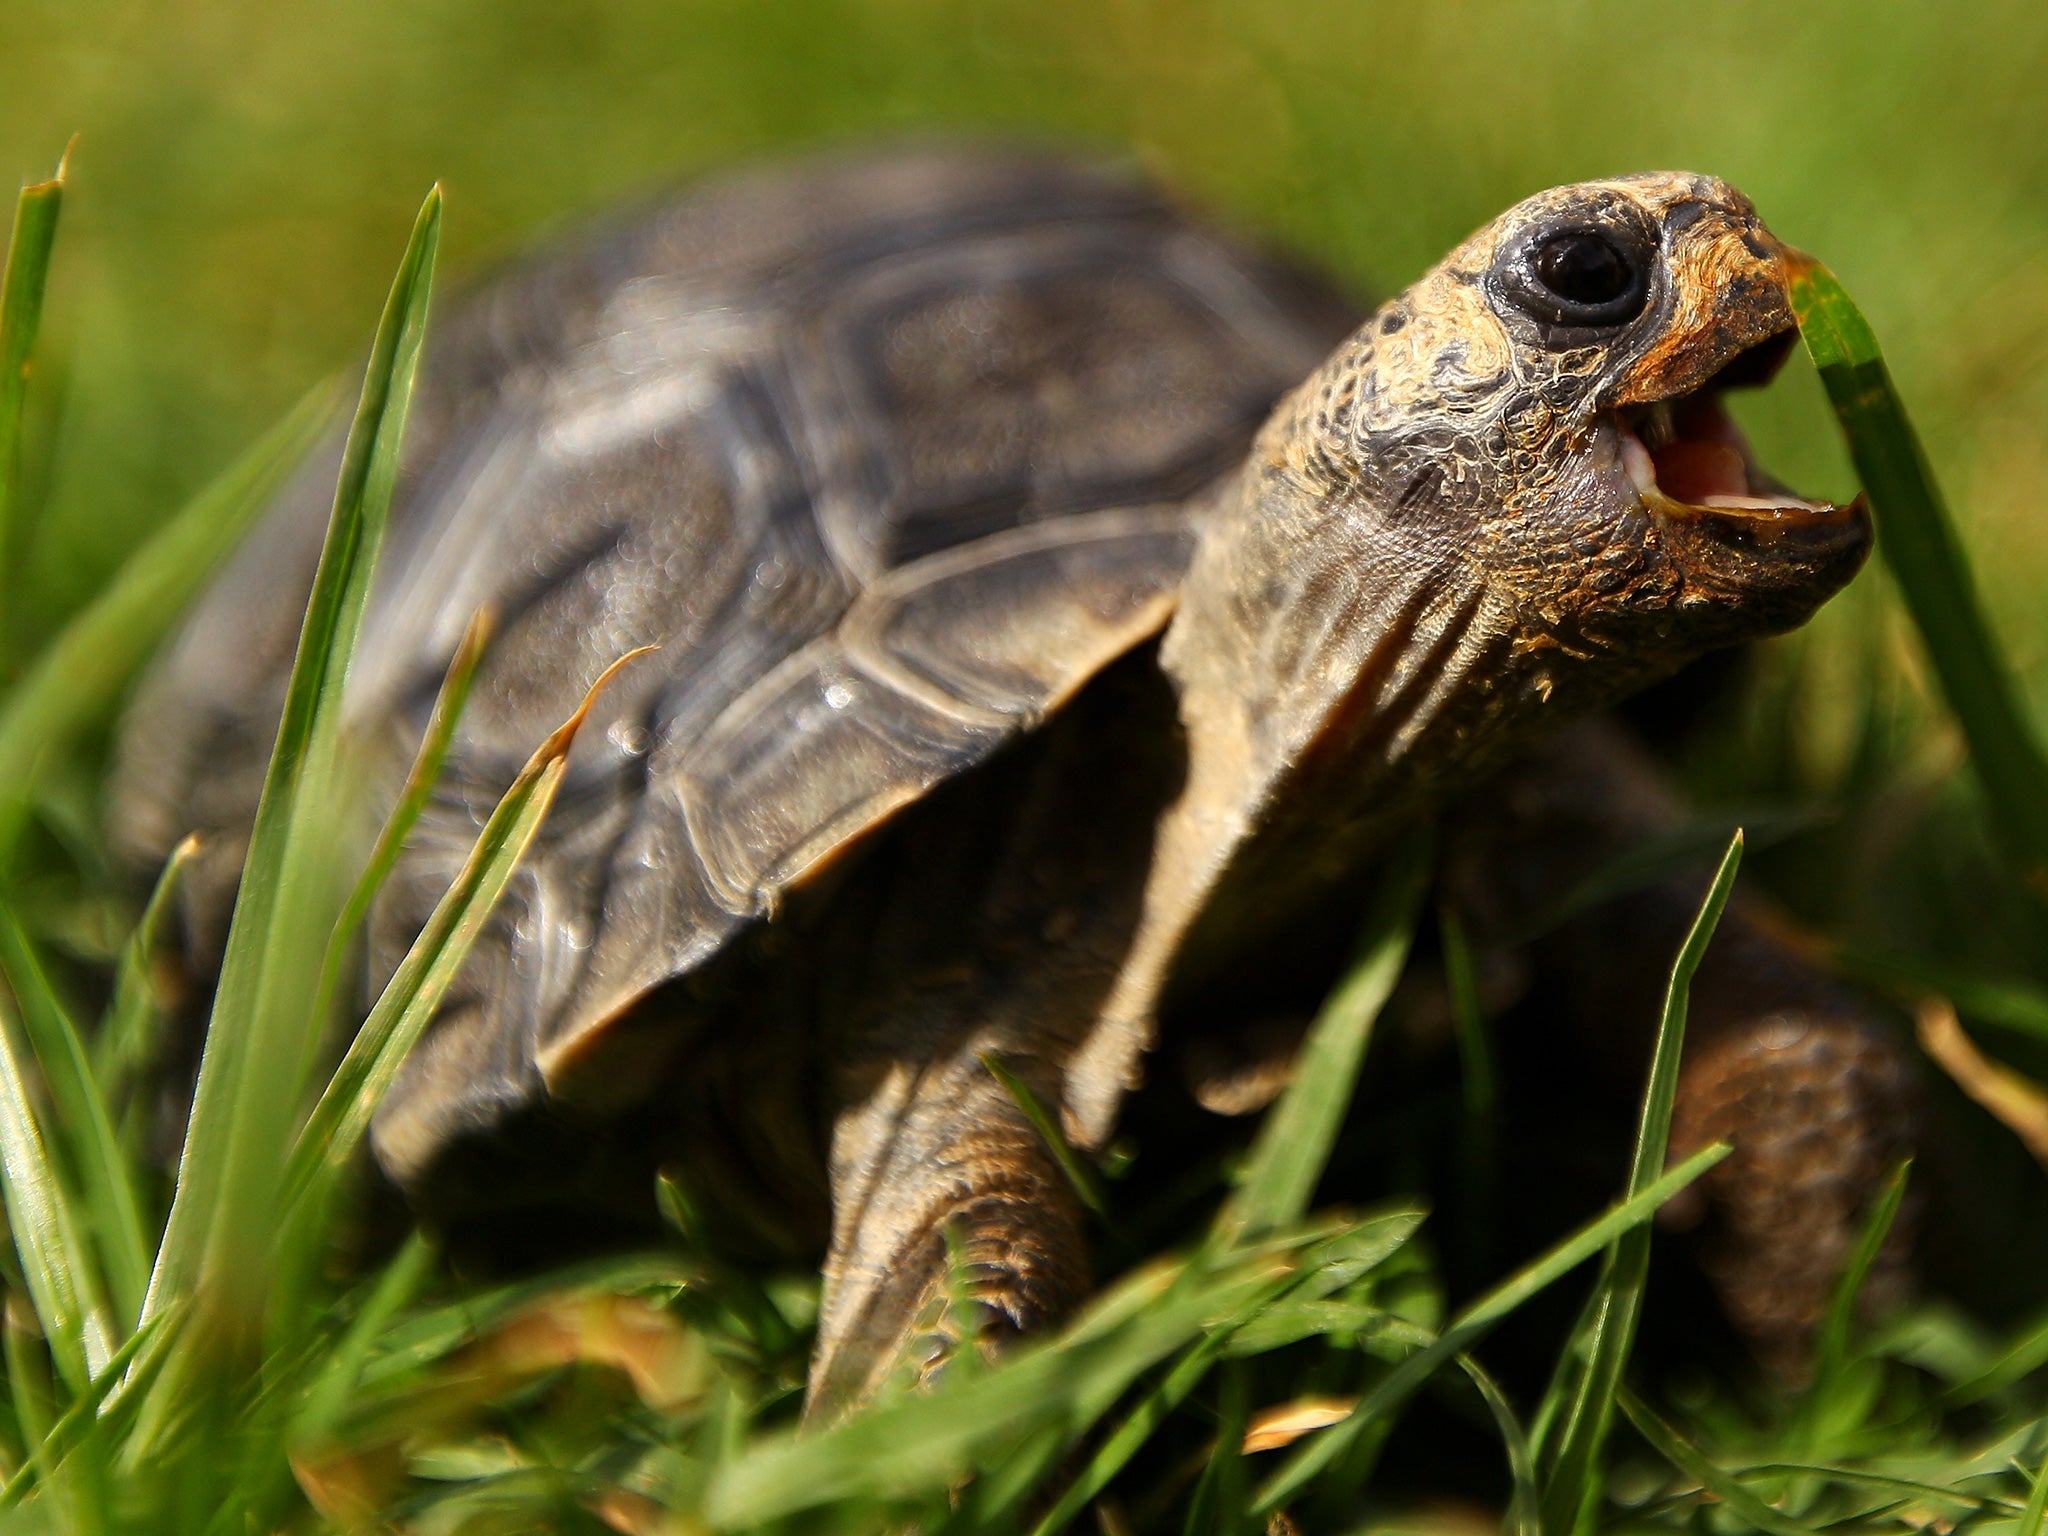 Tortoises tend to hibernate for around three months of the year